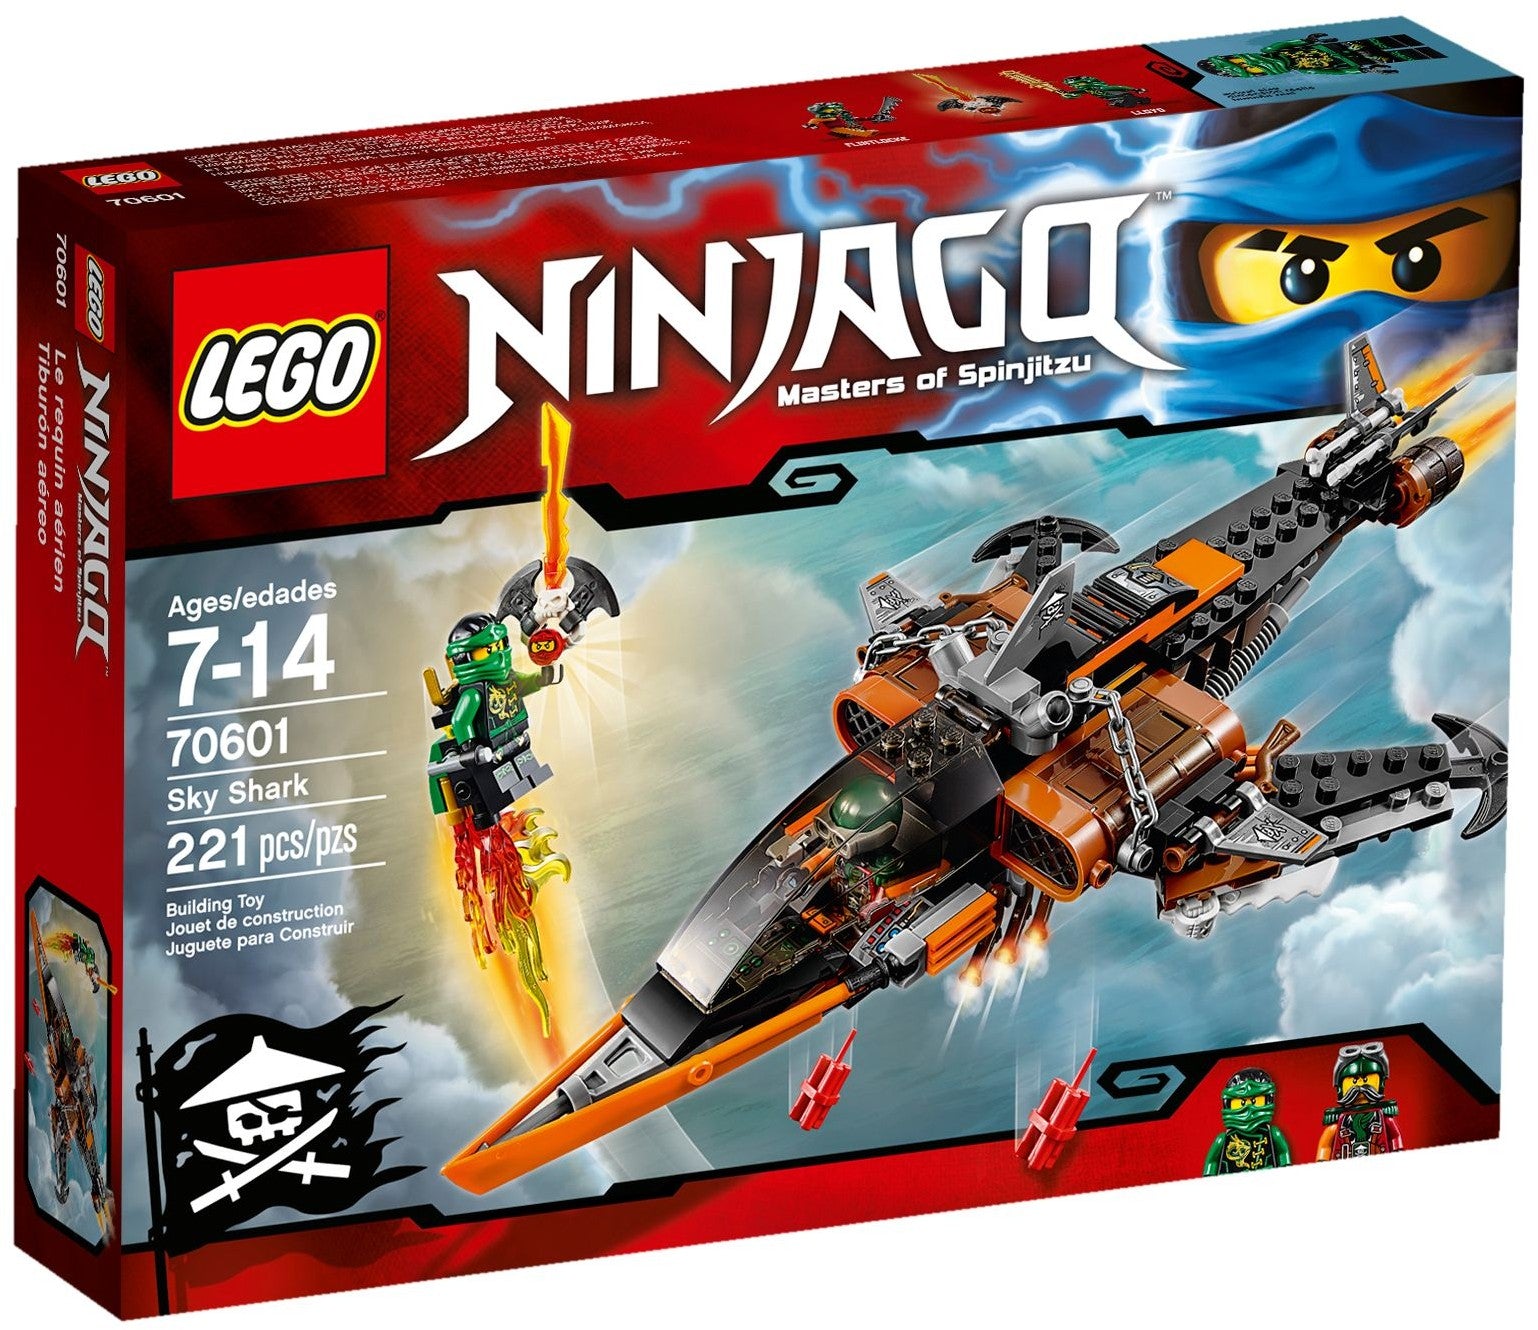 Lego Ninjago 70601 - Sky Shark